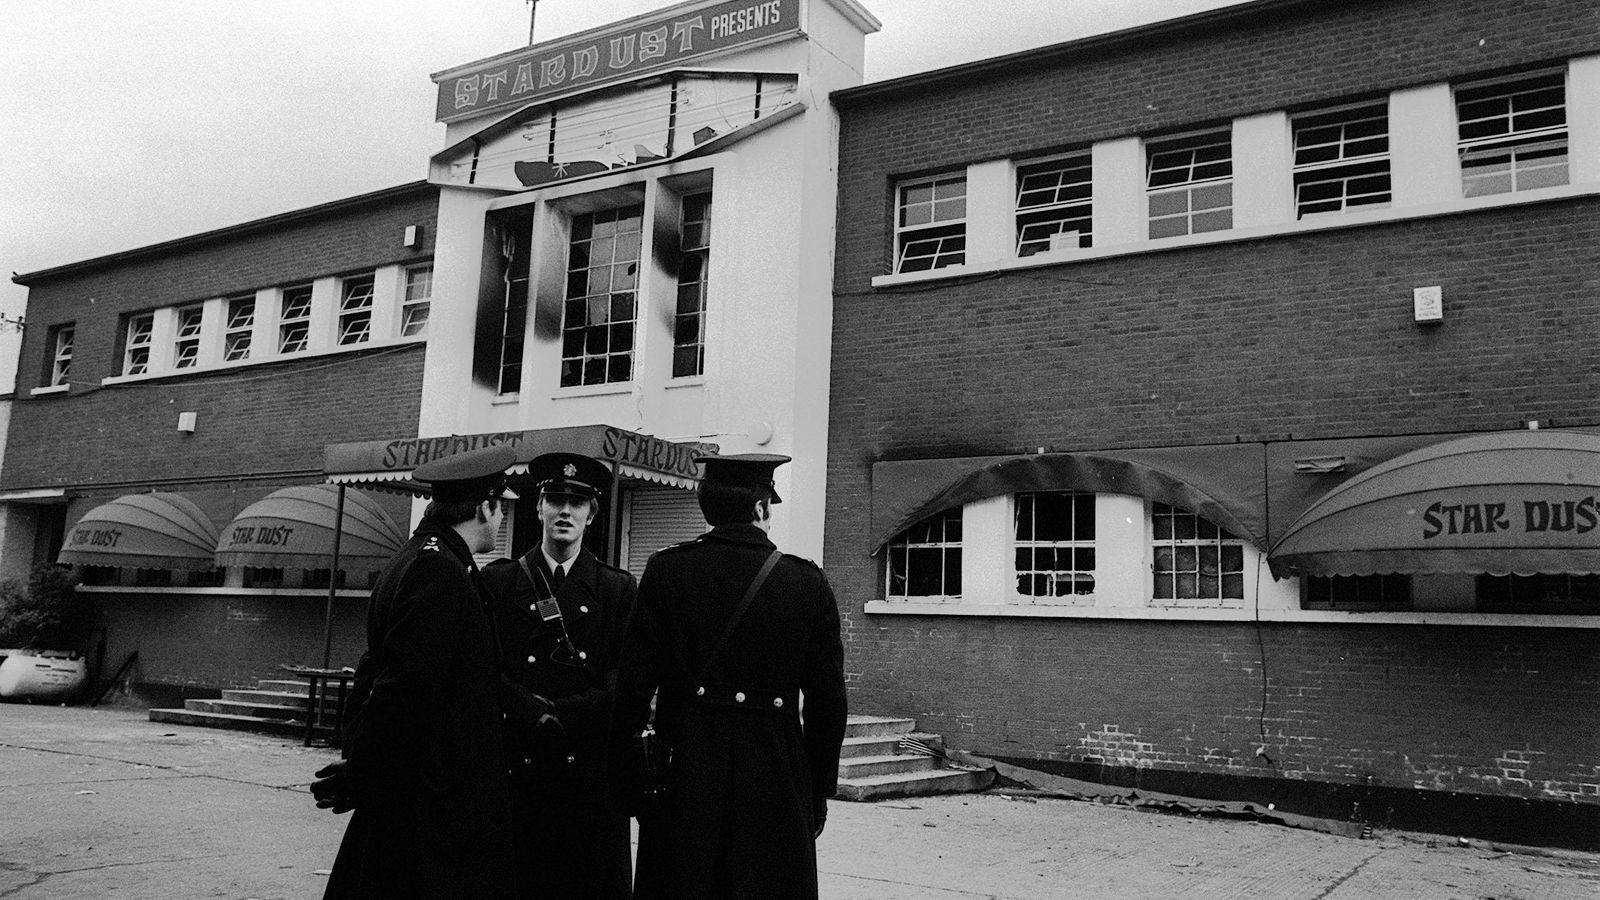 deaths of 48 people in 1981 irish nightclub fire were unlawful killing, jury rules